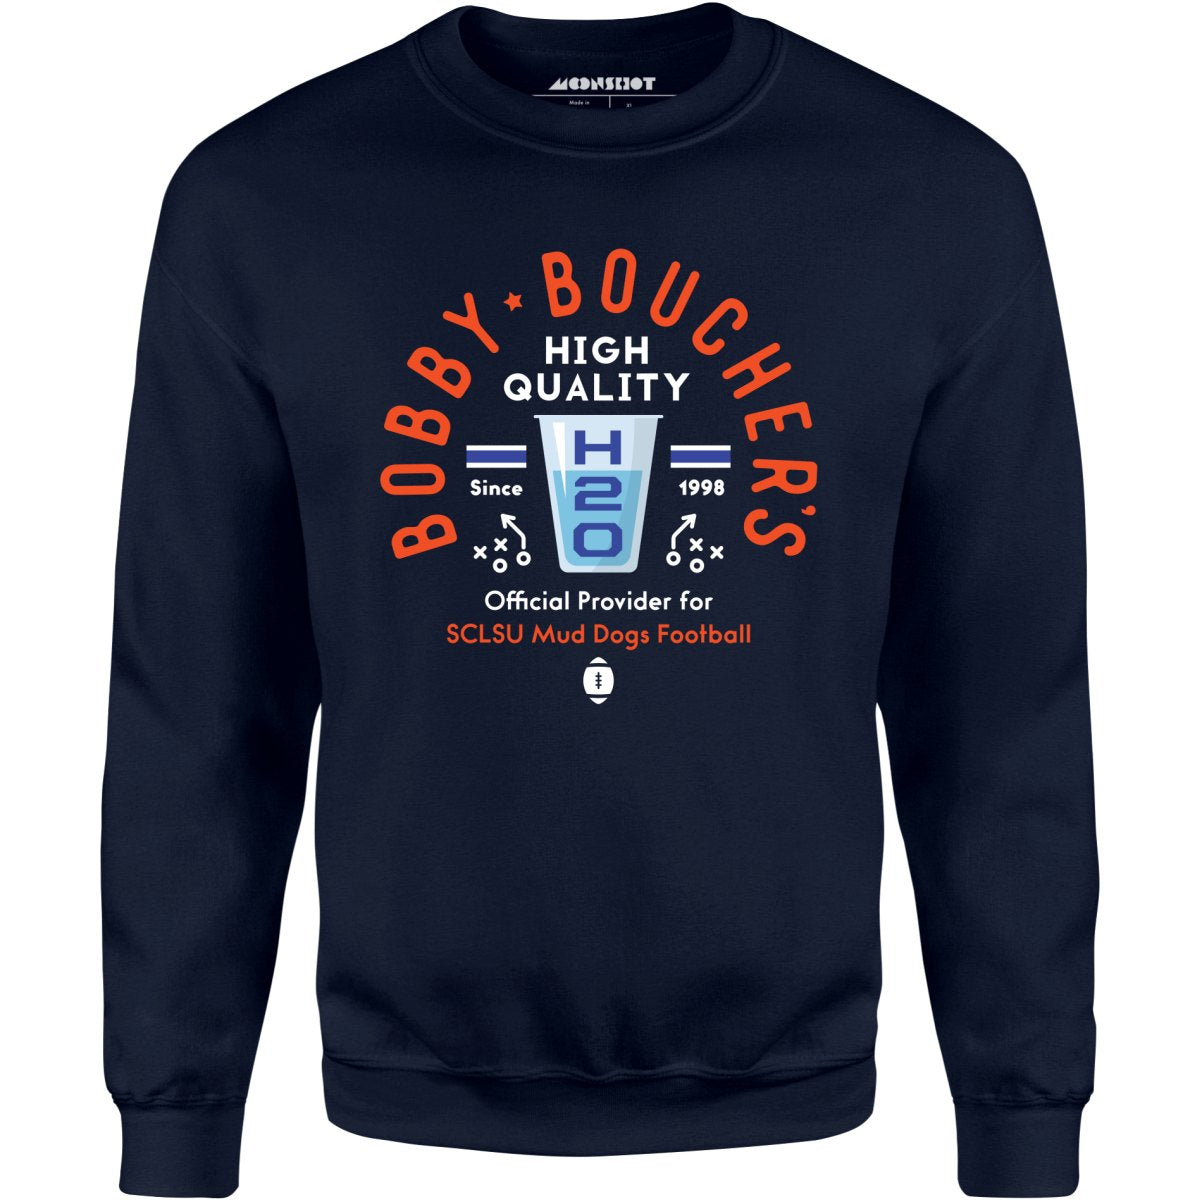 Bobby Boucher's High Quality H2O - Unisex Sweatshirt